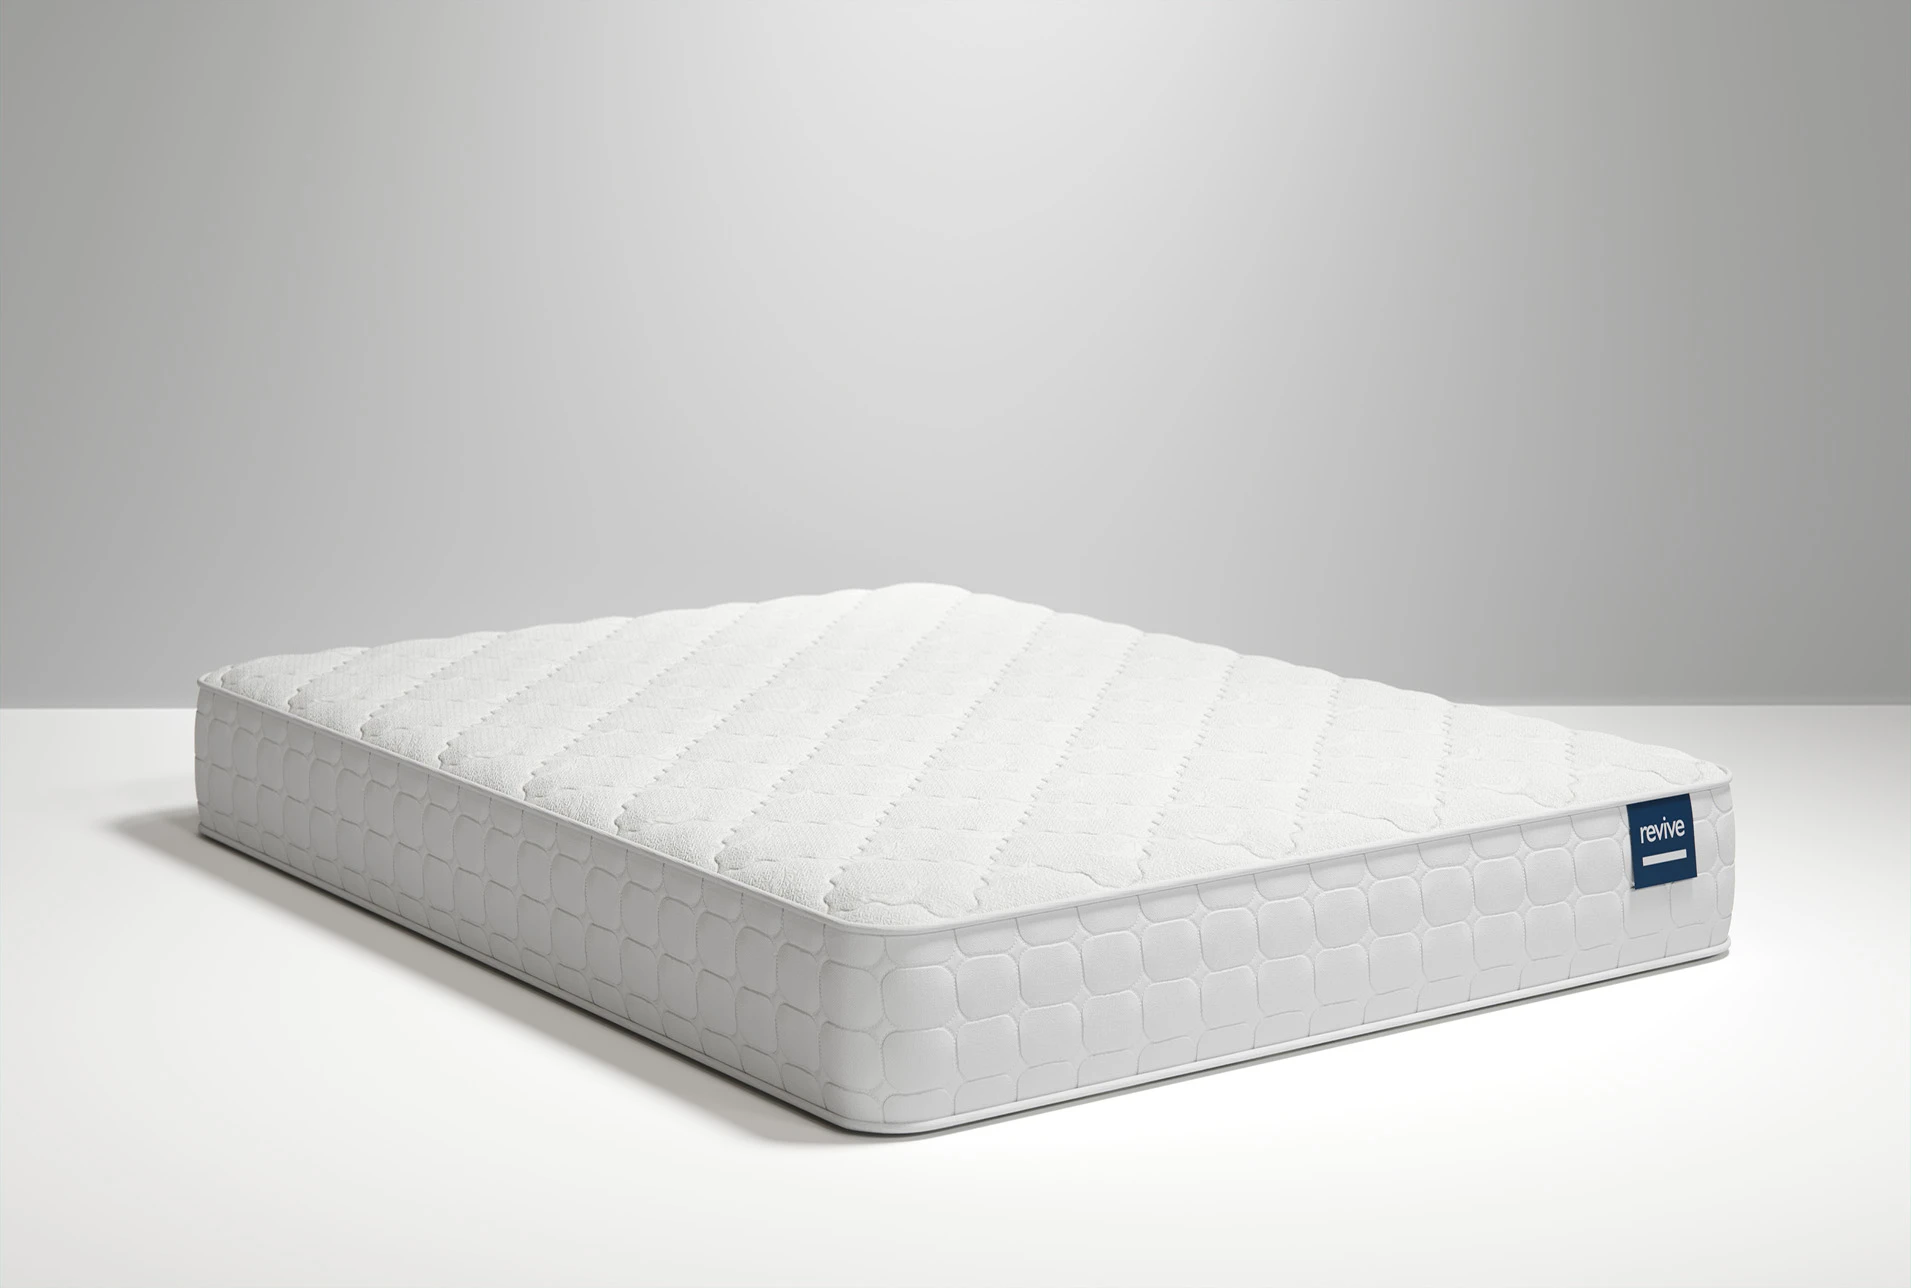 mattress plus bedding gallery hiring age